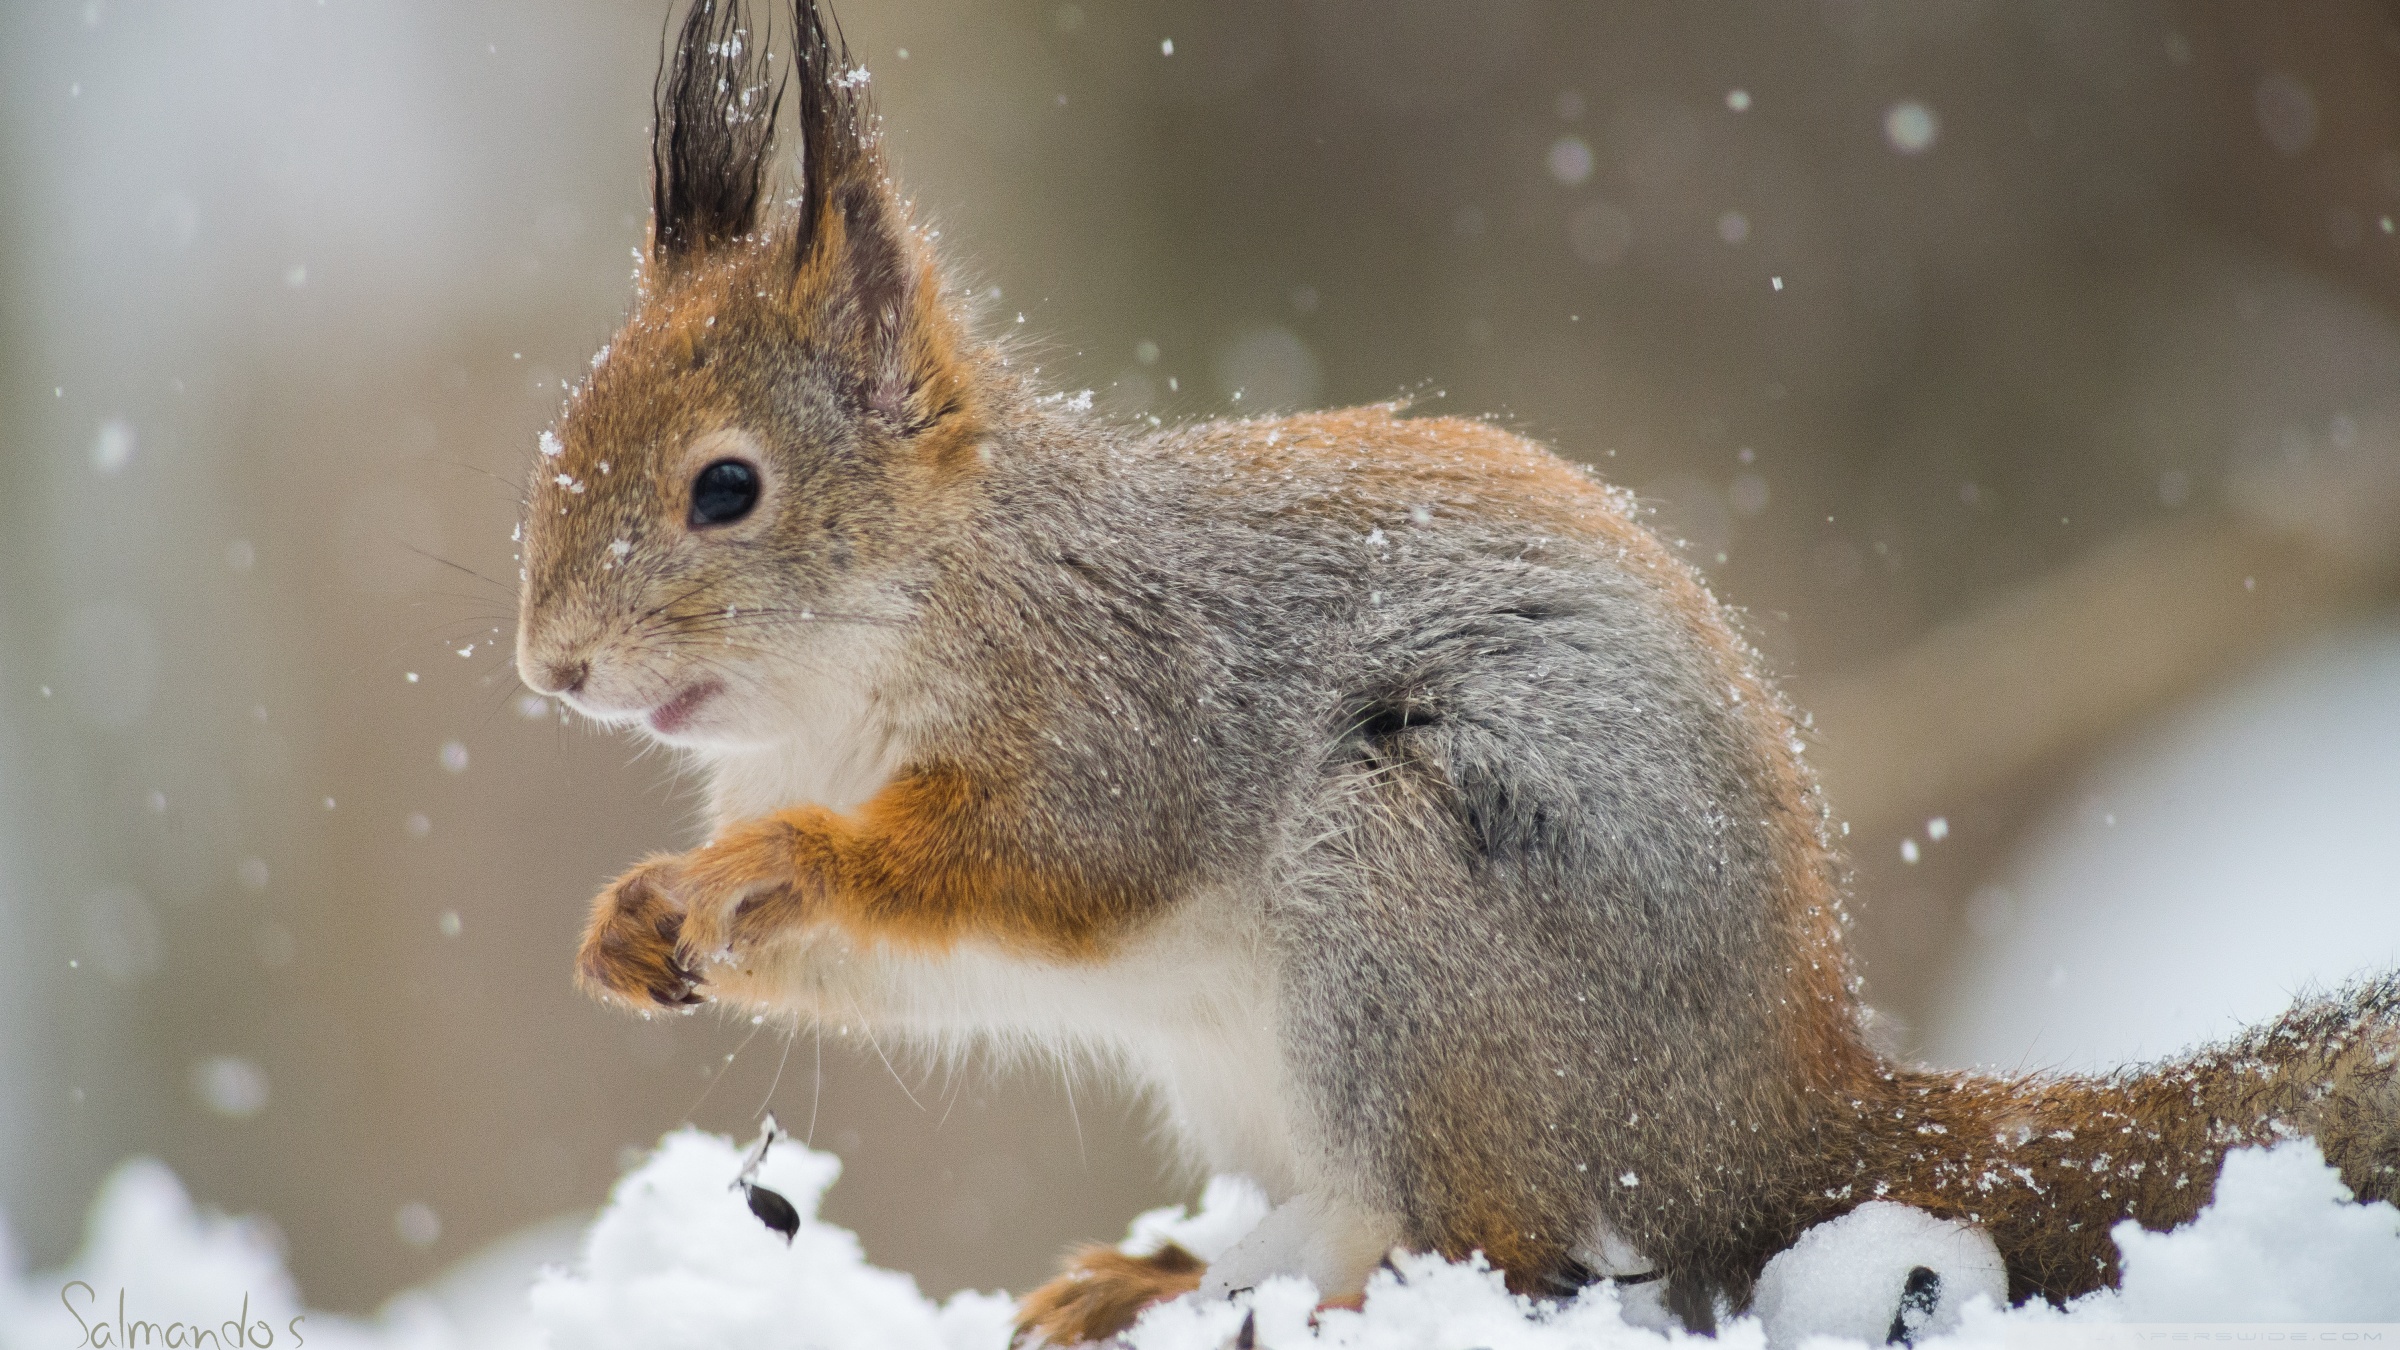 Download 21 cute-winter-wallpaper Cute-Squirrel-Snowfall-Winter-Holidays-4K-HD-Desktop-.jpg